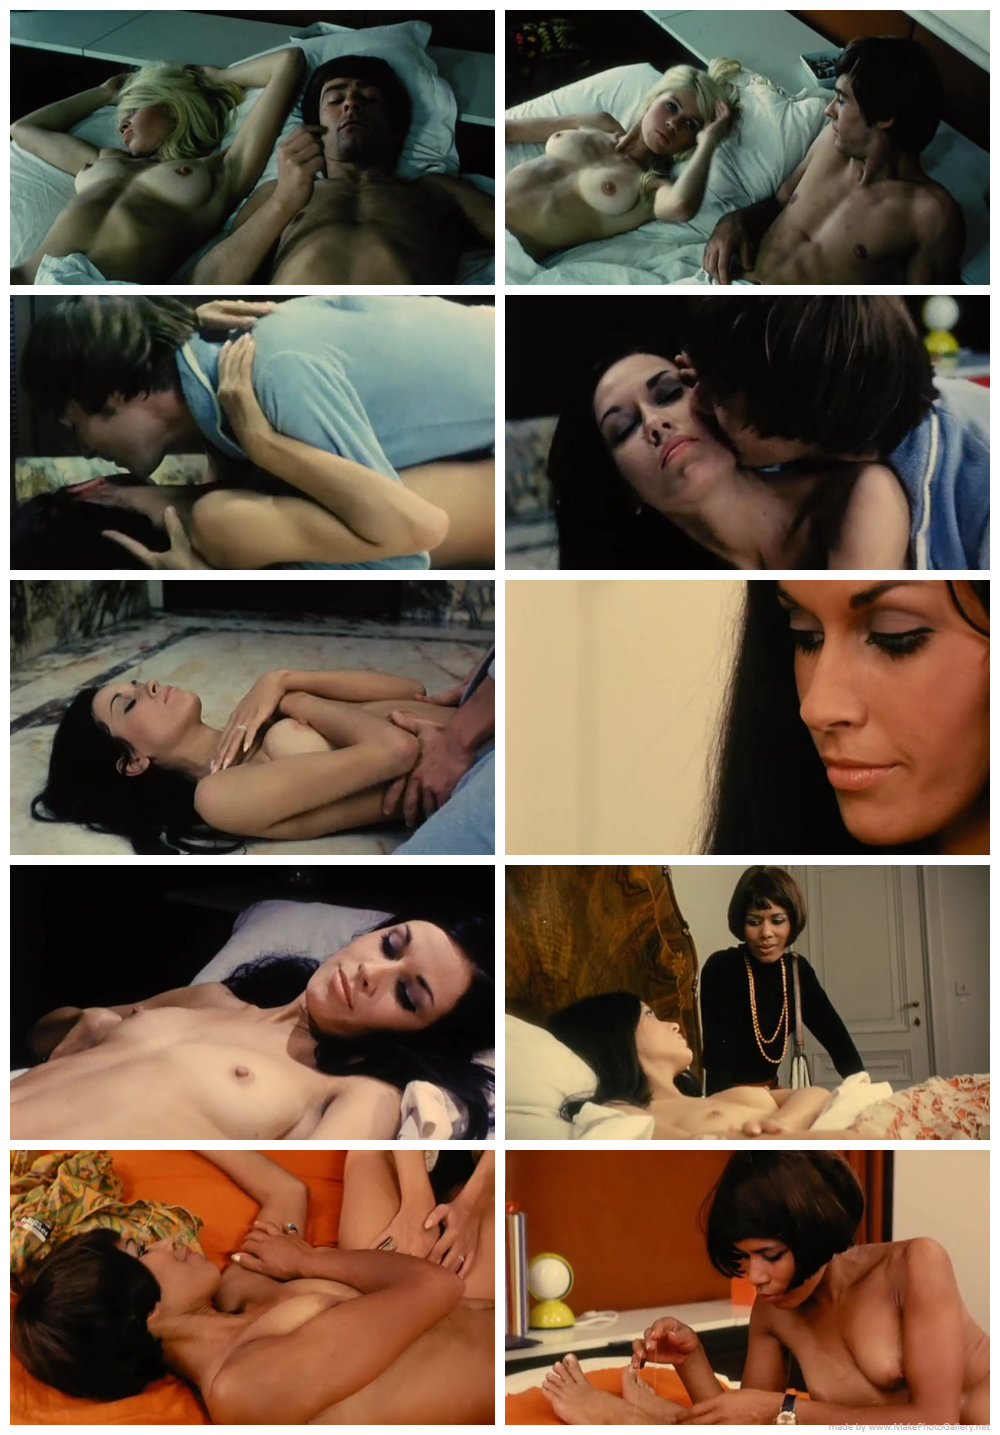 Letreinte AKA The Embrace (1969) EroGarga Watch Free Vintage Porn Movies, Retro Sex Videos, Mobile Porn